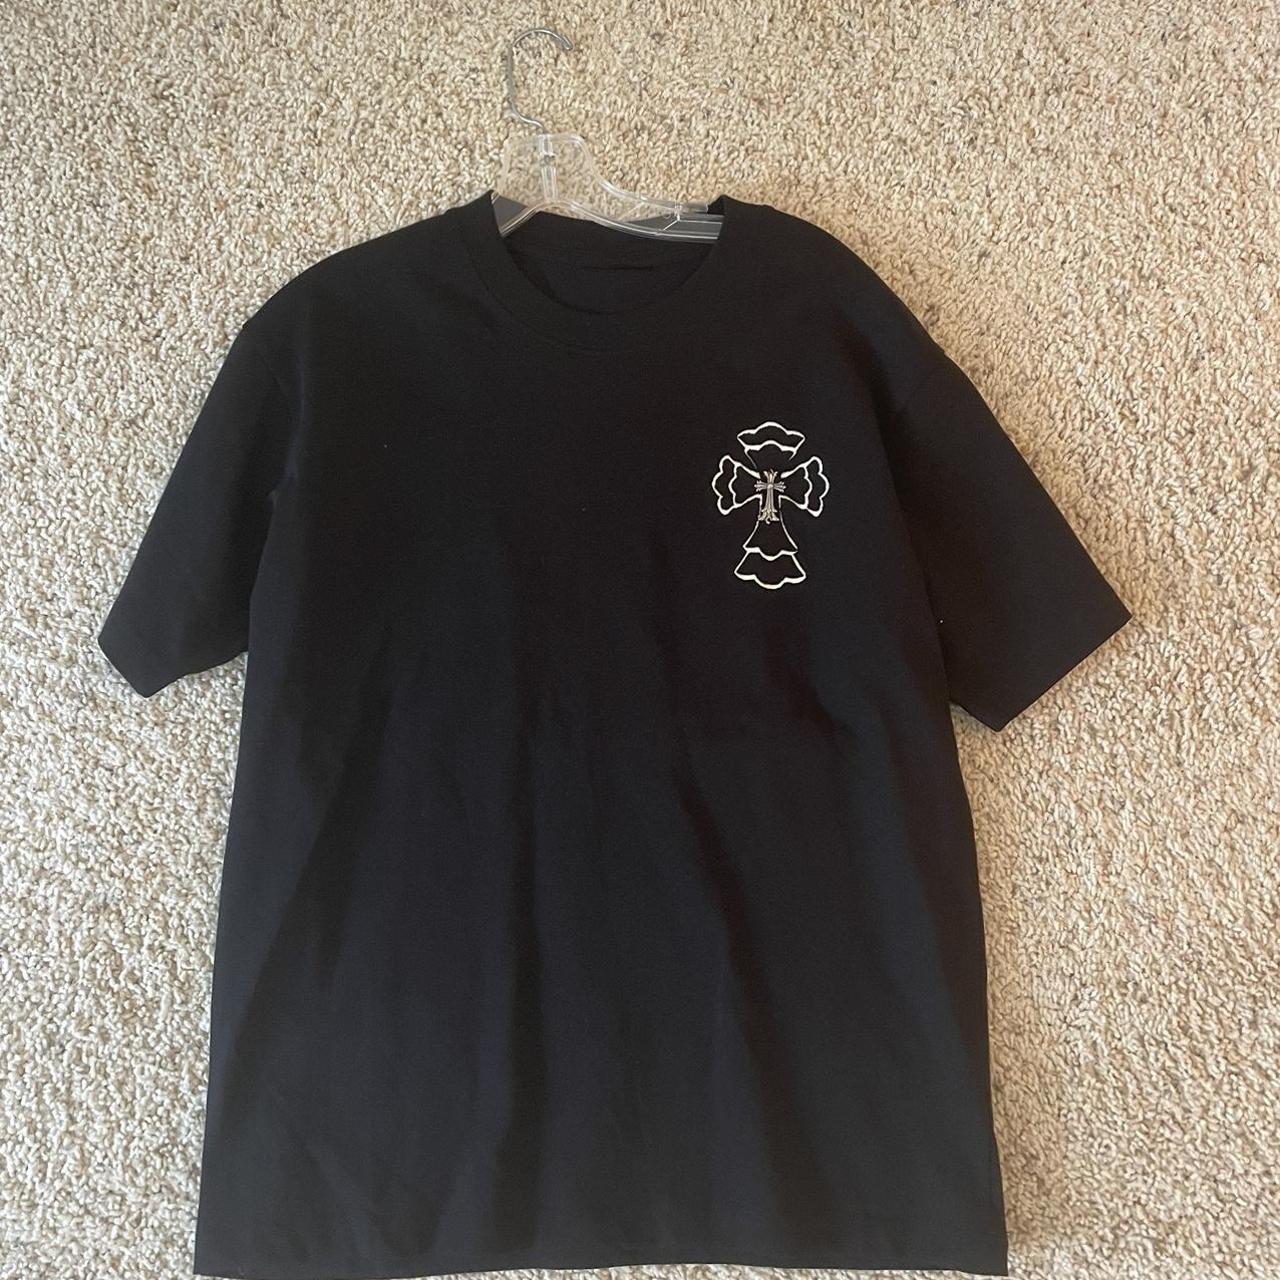 Black Chrome Hearts T Shirt Size L Brand New - Depop